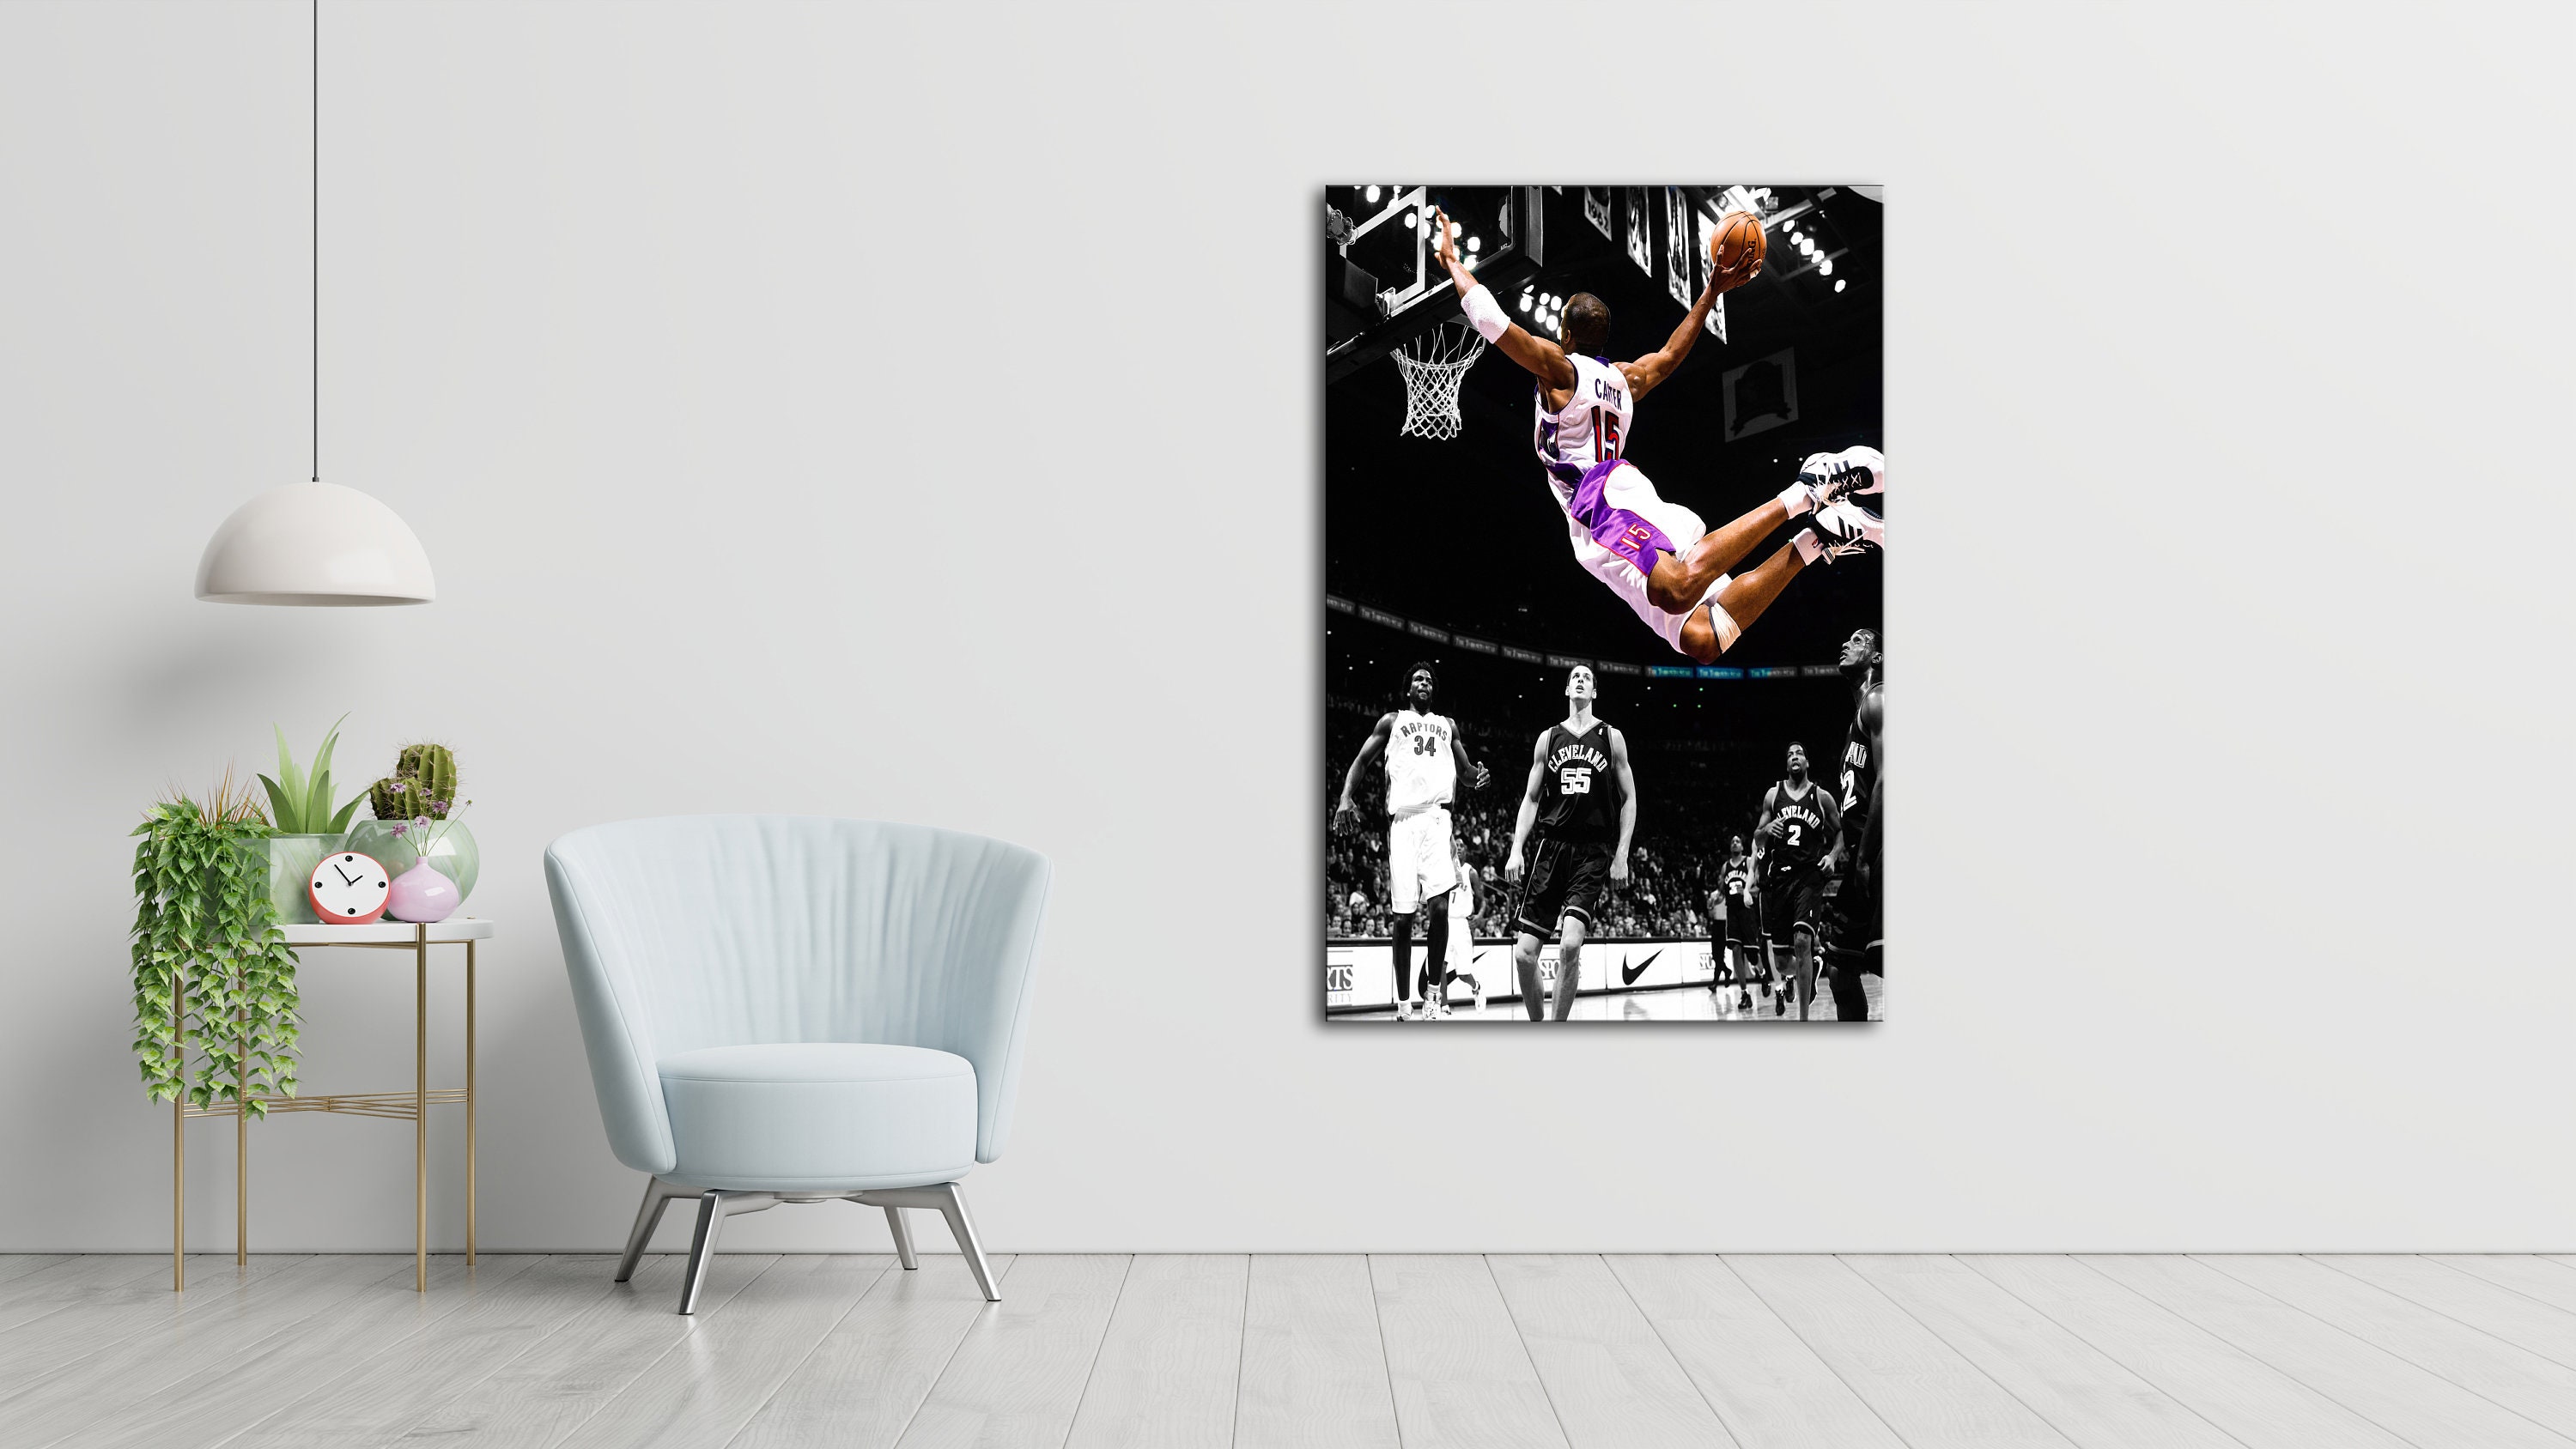 Vince Carter In-Vince-Able Toronto Raptors All-Star Slam-Dunk Poster -  Starline 2000